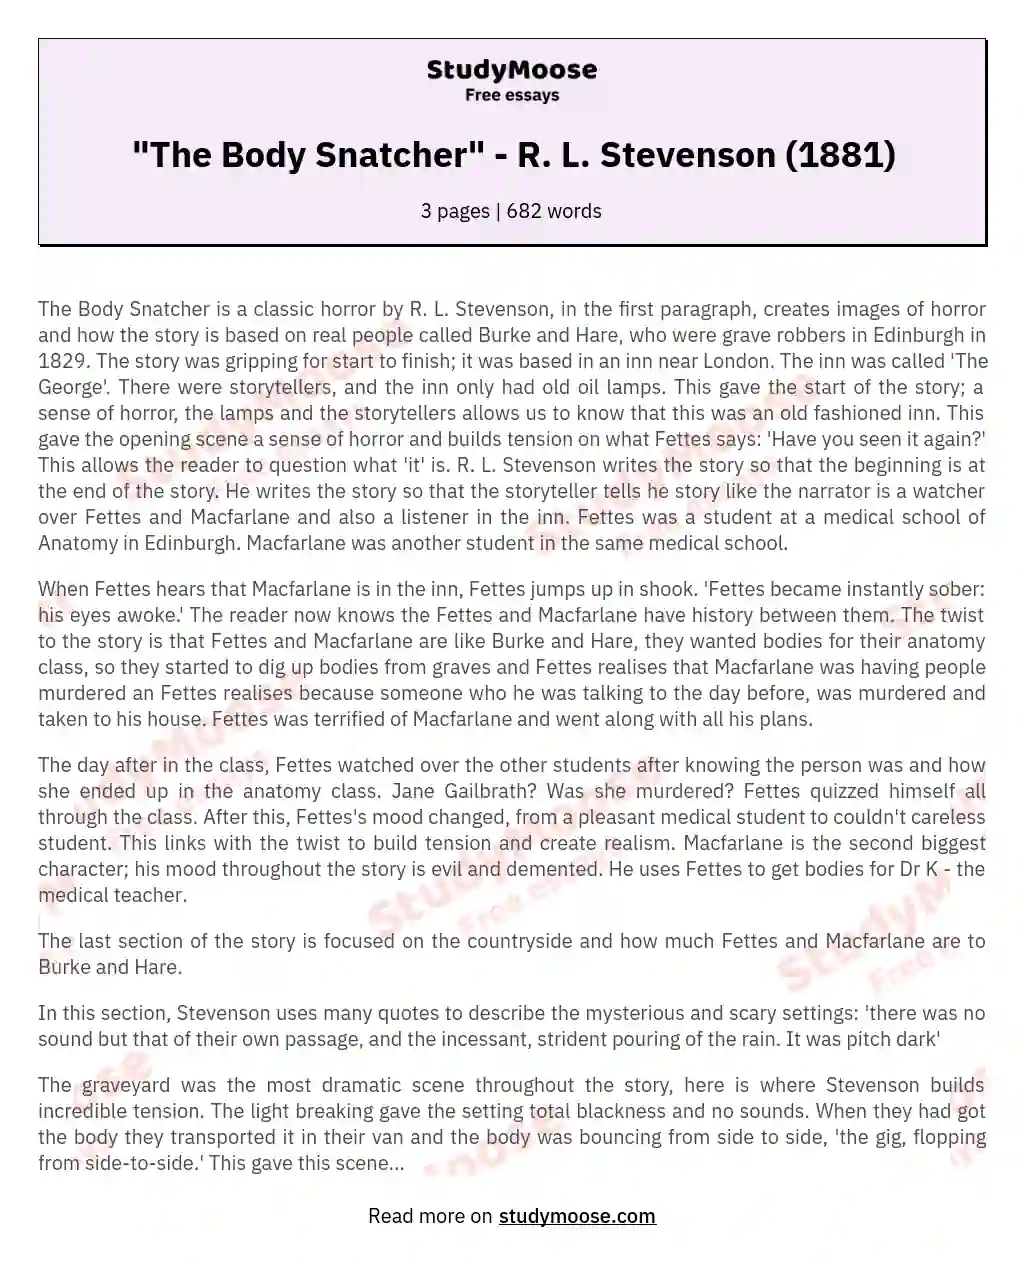 "The Body Snatcher" - R. L. Stevenson (1881) essay